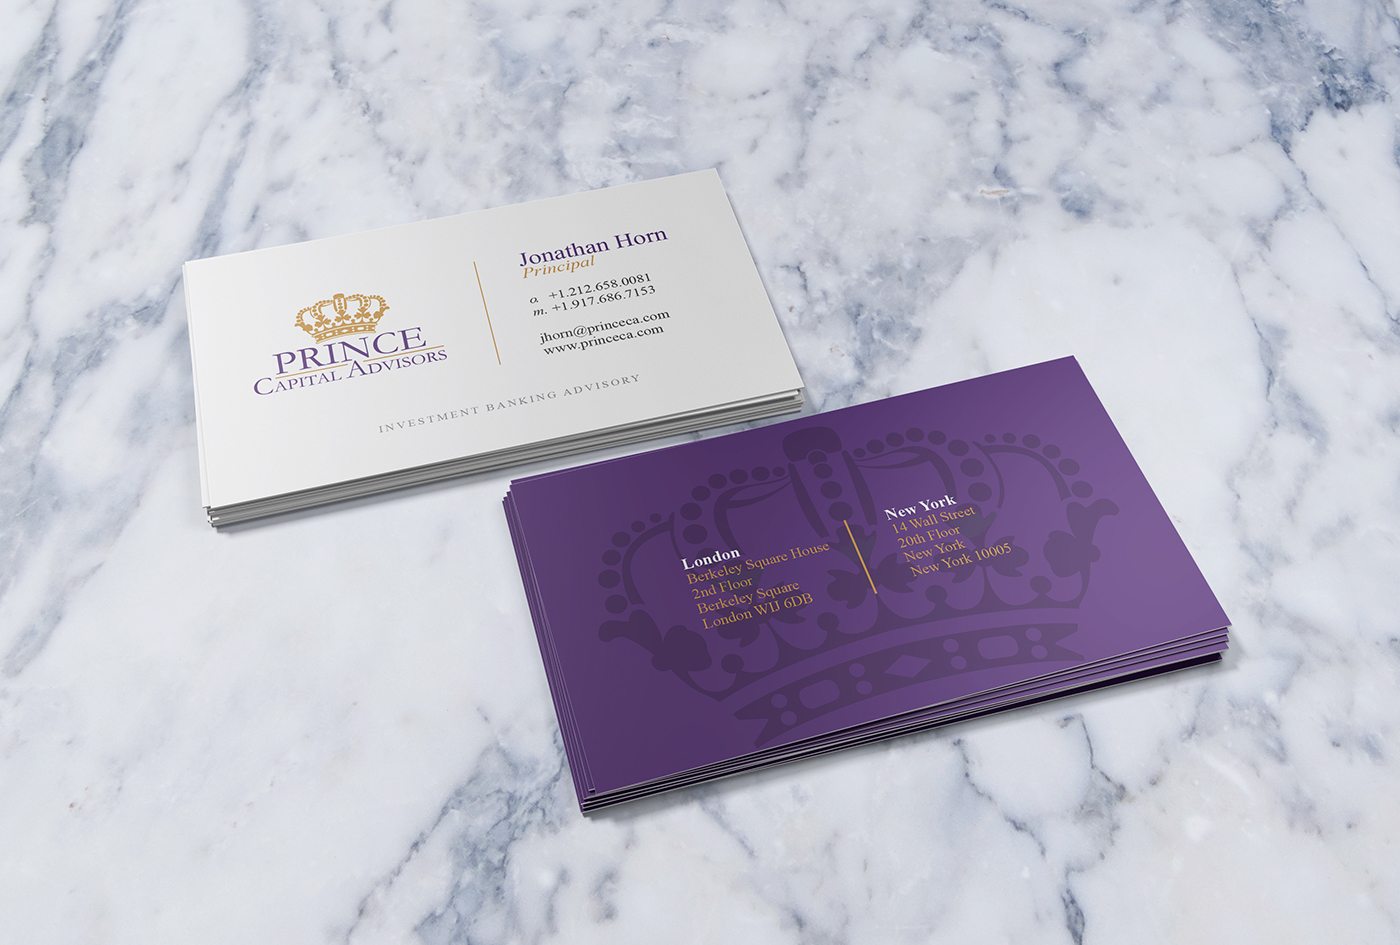 Investment banking Advisors solari creative prince crown purple royal wordpress Stationery letterhead Business Cards